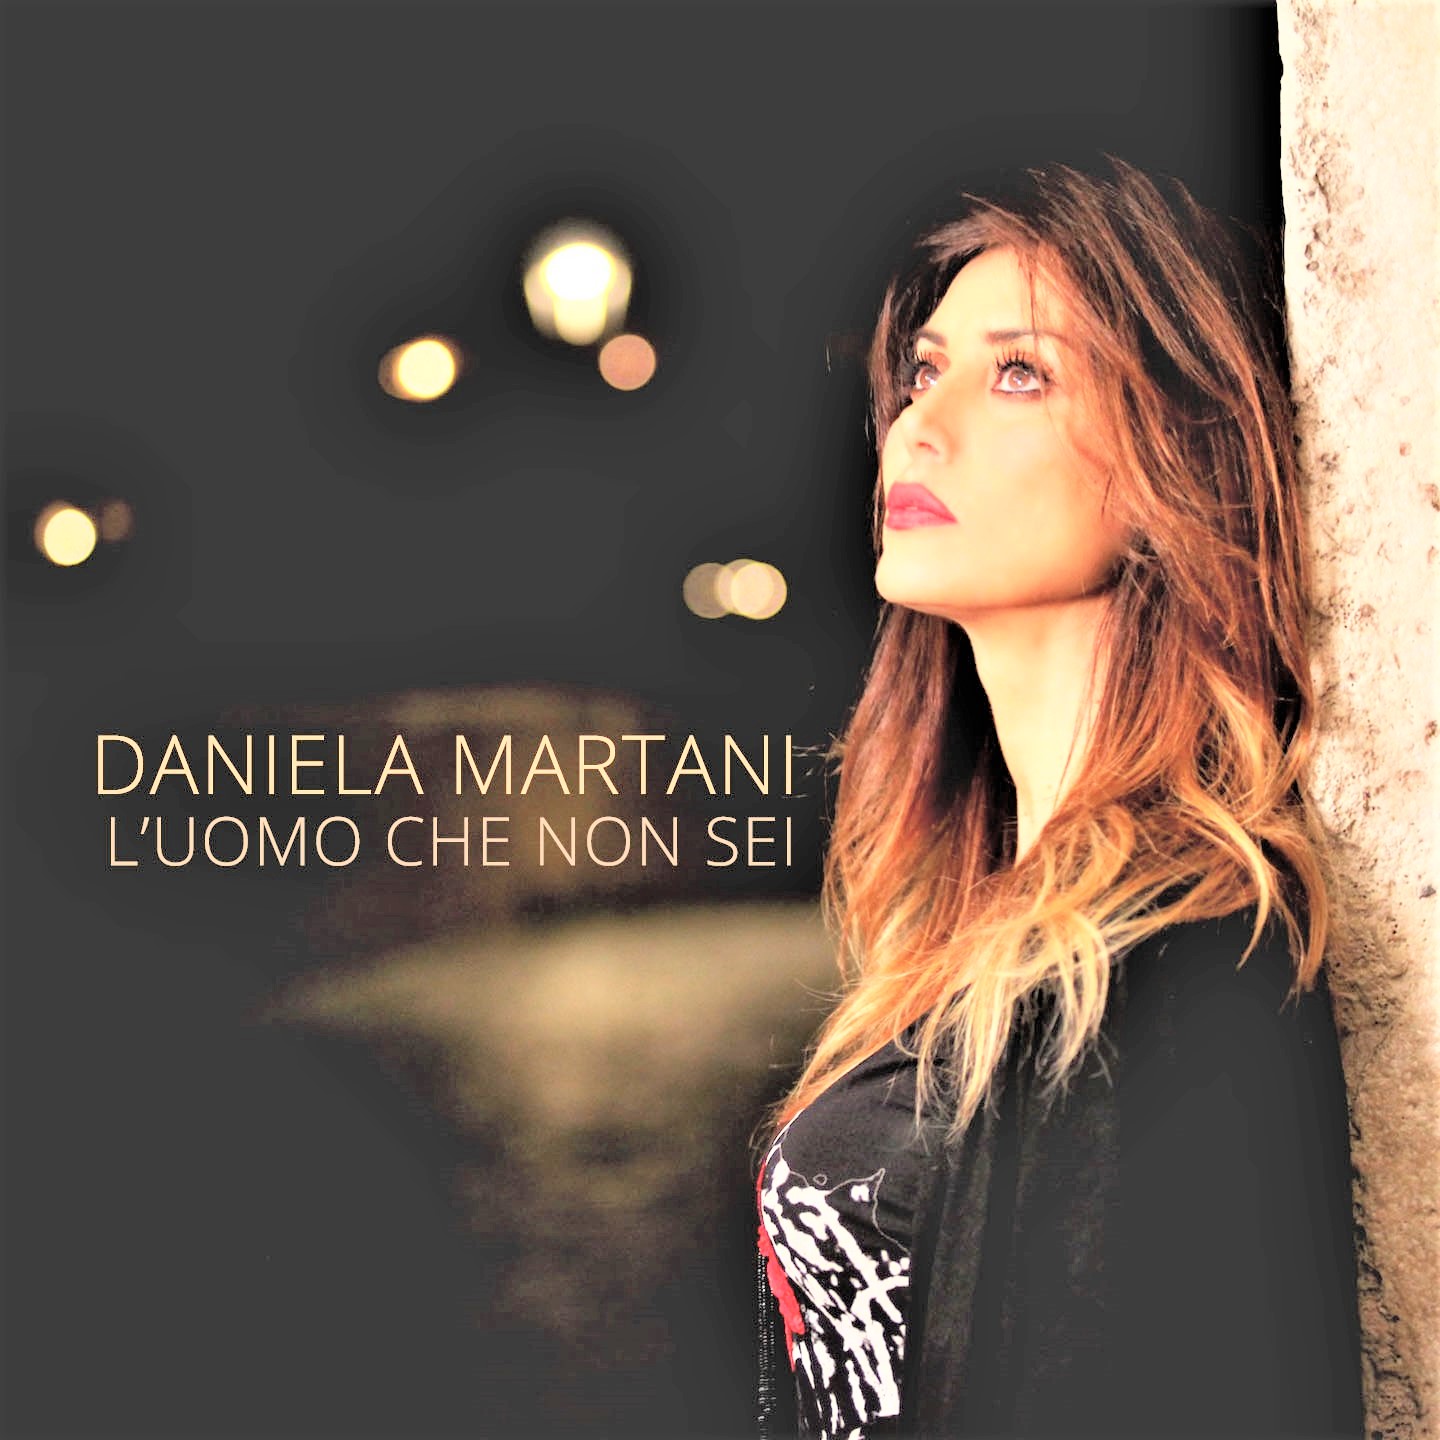 Daniela Martani